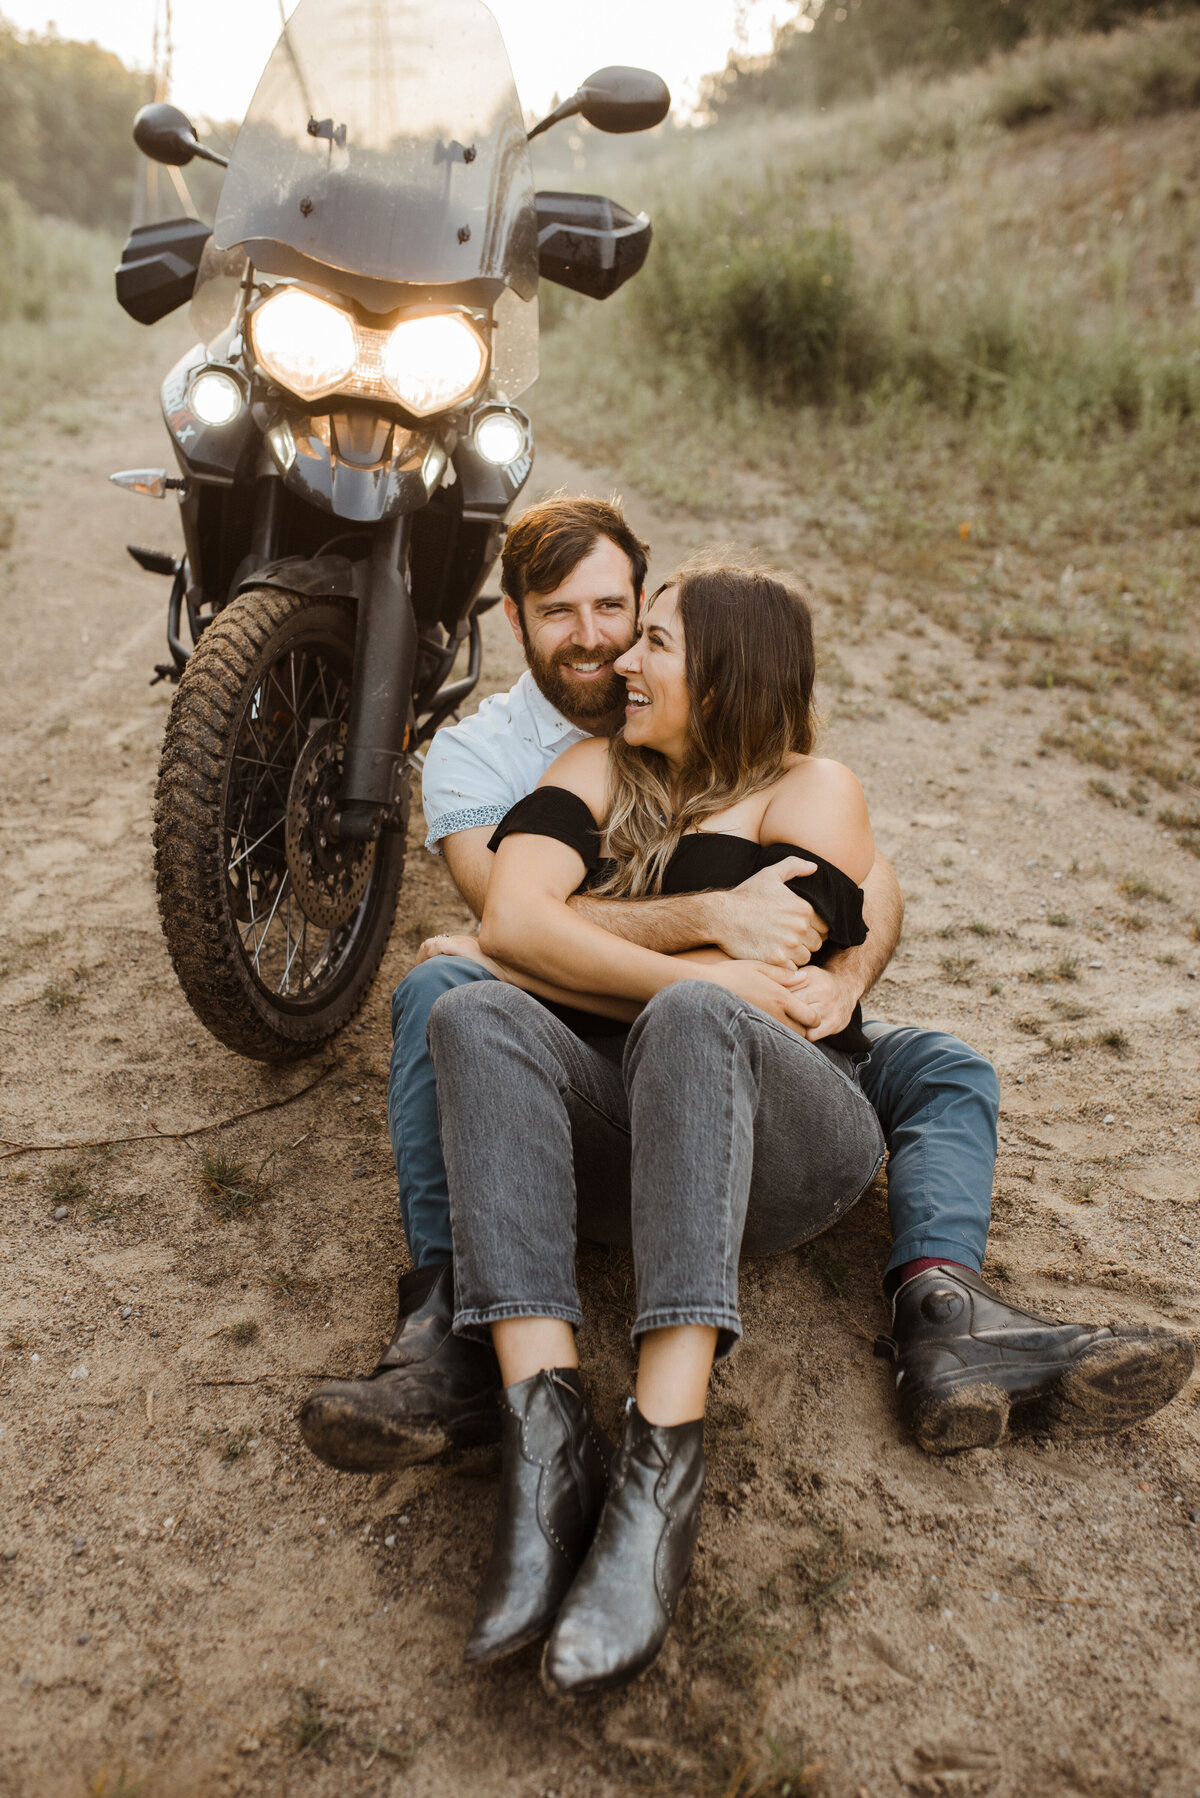 toronto-outdoor-fun-bohemian-motorcycle-engagement-couples-shoot-photography-25